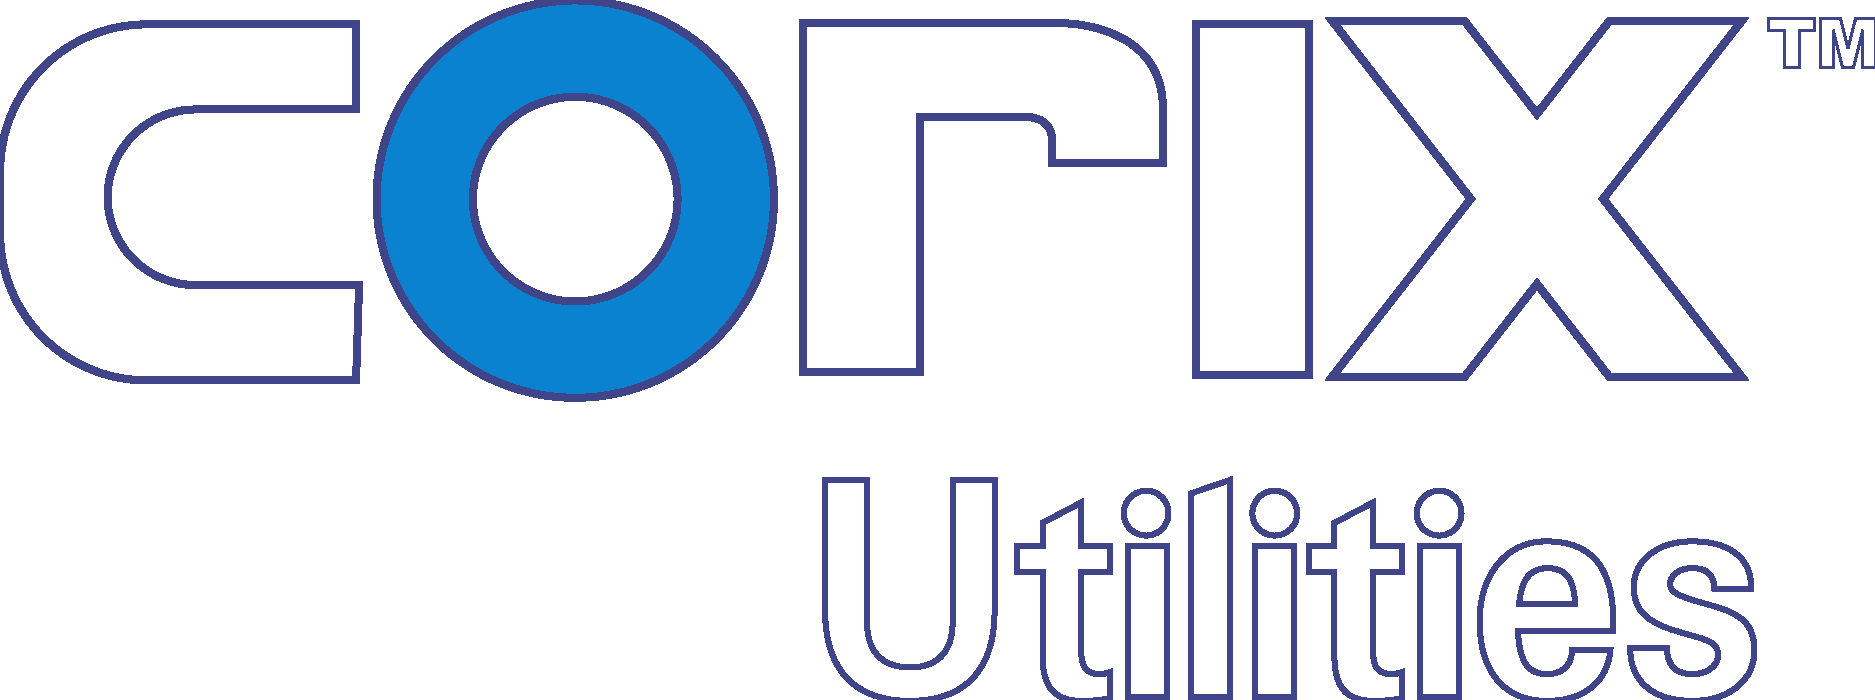 corix utilities Logo Vector